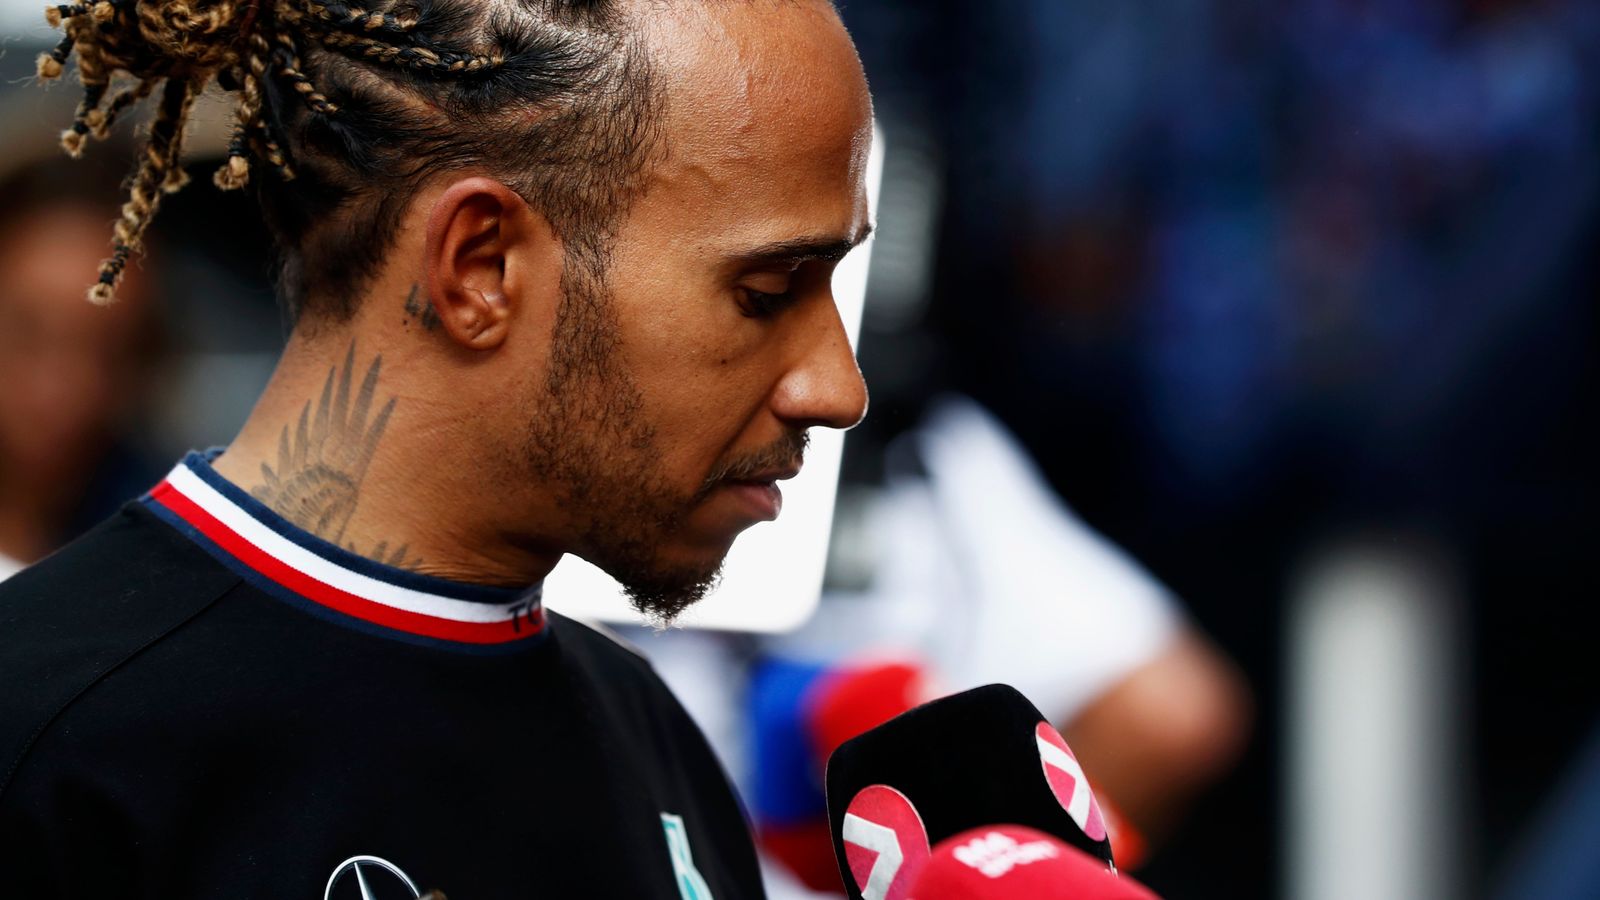 Monaco GP: Lewis Hamilton says Mercedes car felt ‘horrendous’ in qualifying as he struggles to P8